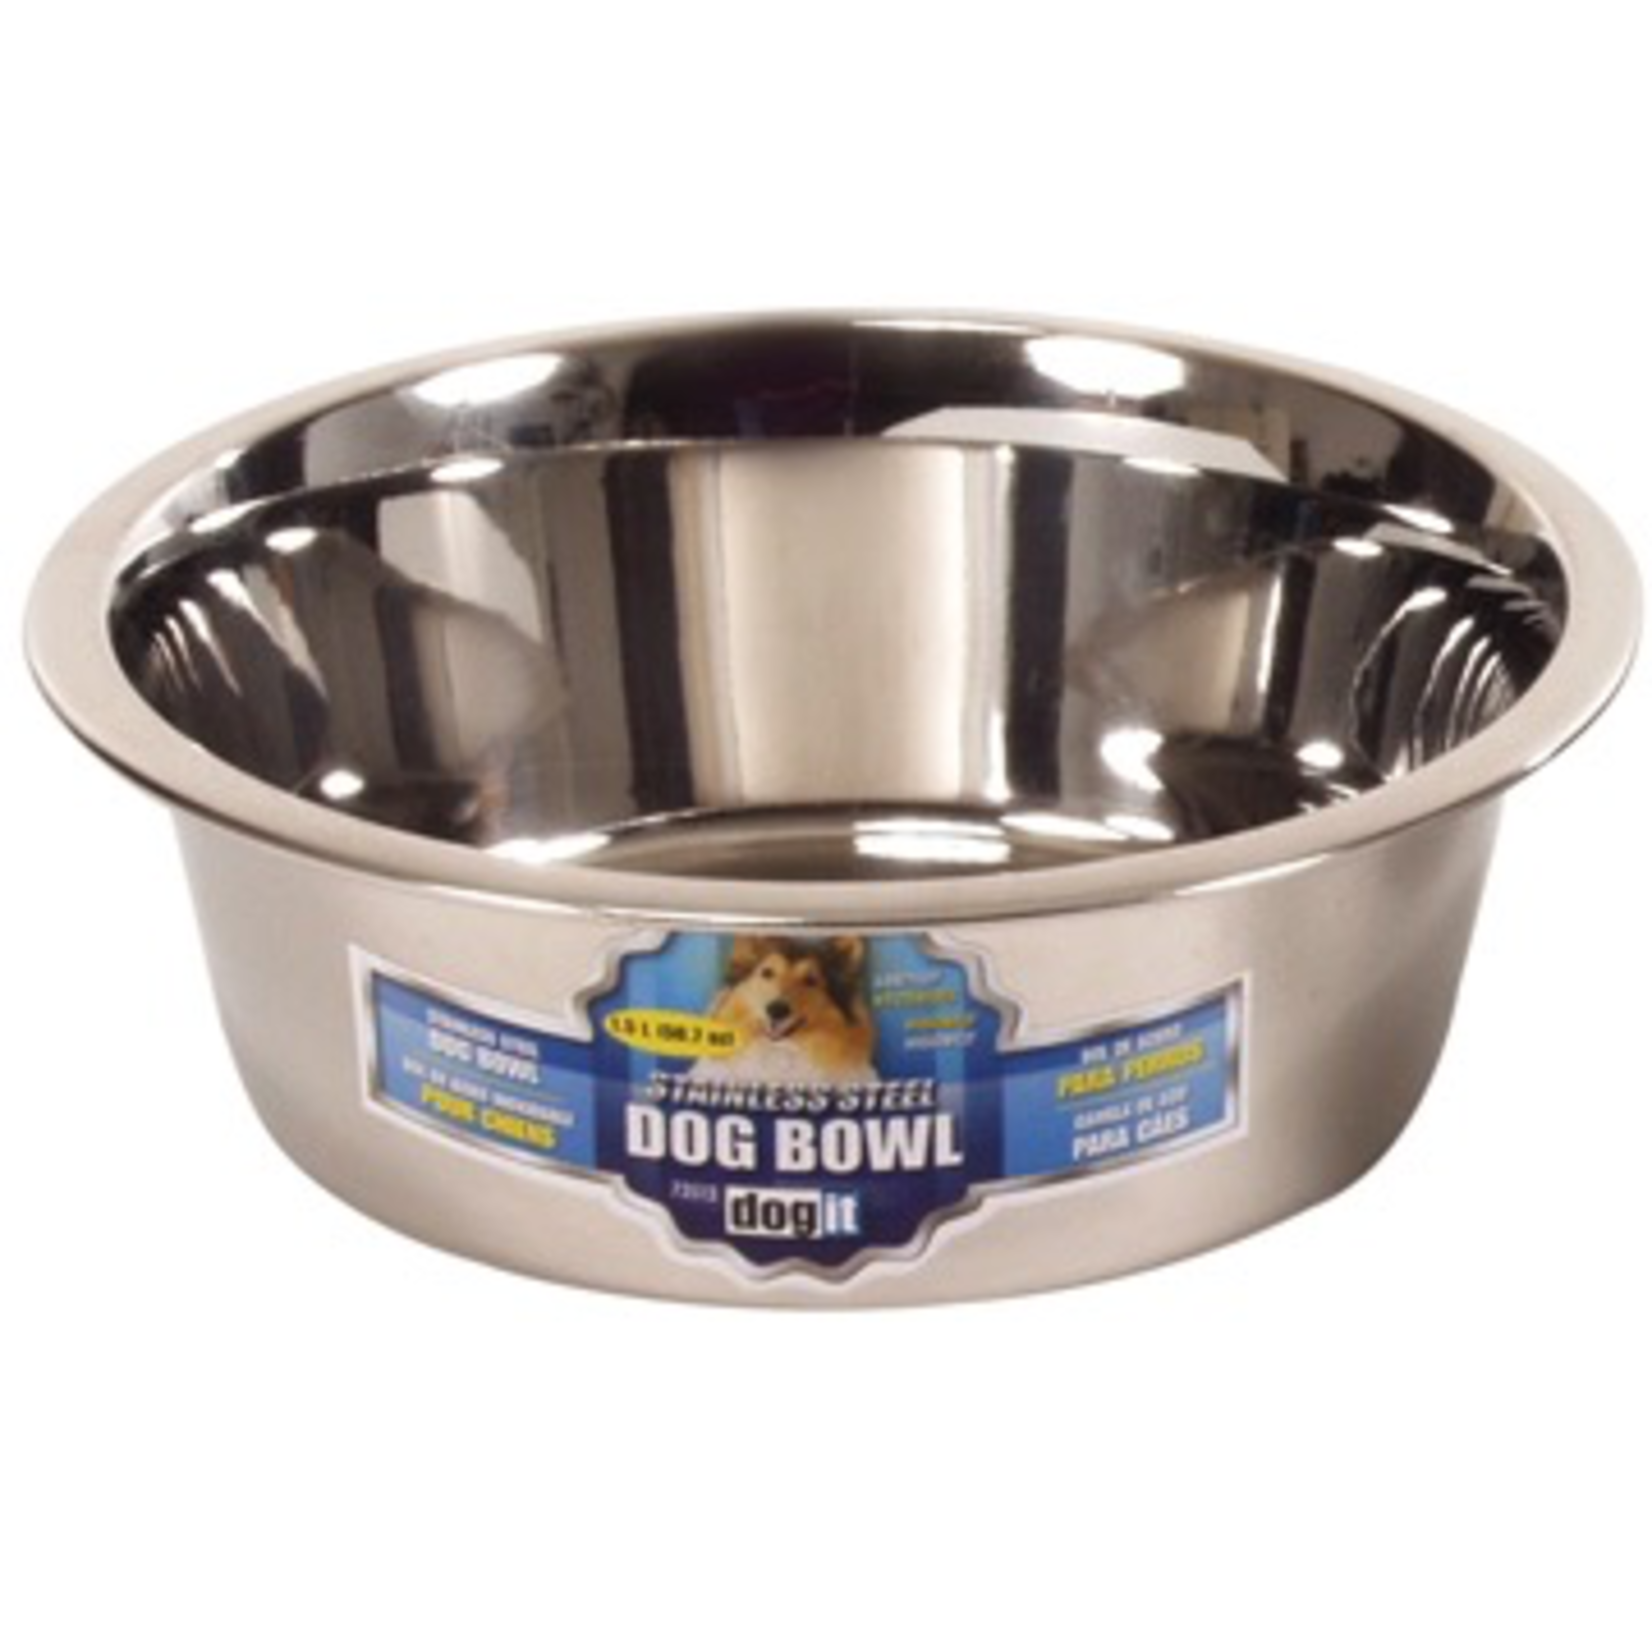 DOG IT (W) Dogit Stainless Steel Dog Bowl, Large - 1.5L (50 fl oz)